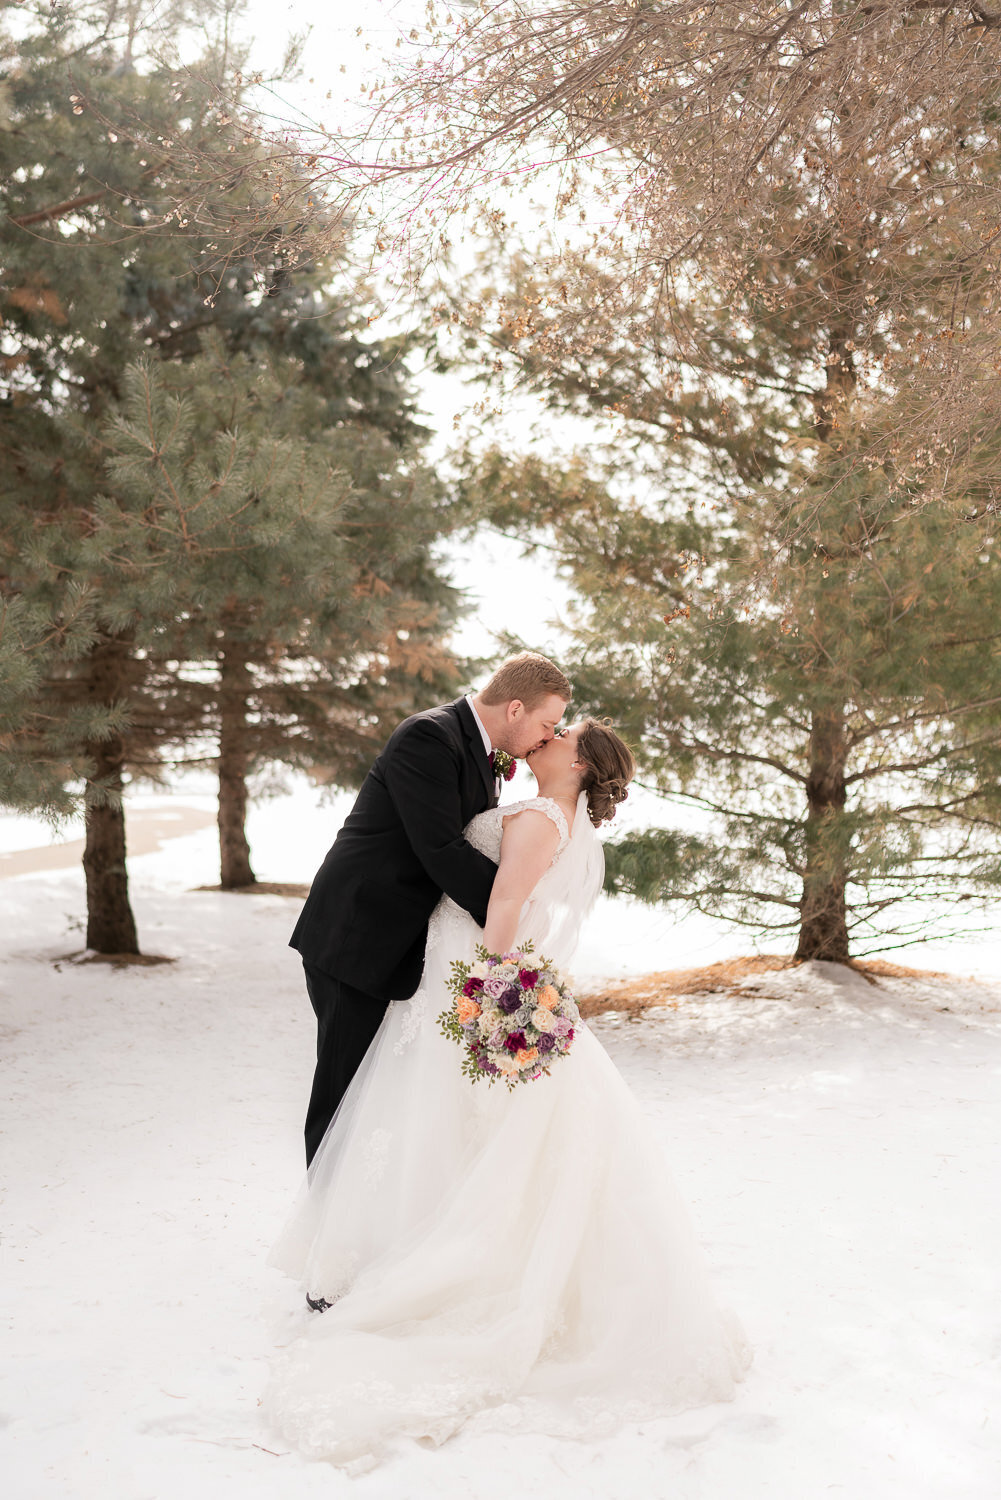 Minnesota Wedding Photography - Candid Wedding Photos - RKH Images (5 of 15)